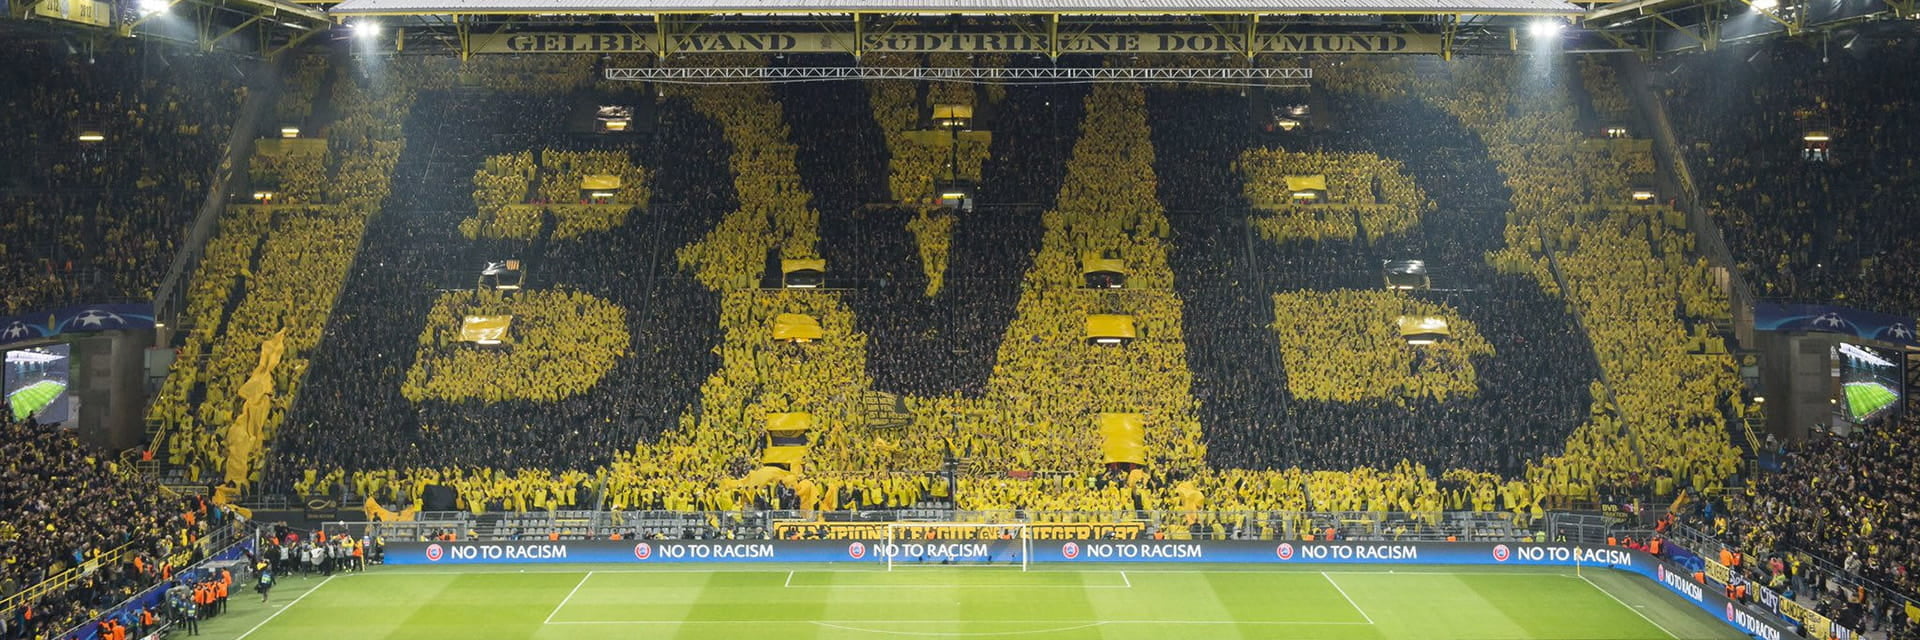 Borussia Dortmund - VfL Bochum, 6 novemberkl. 15:30